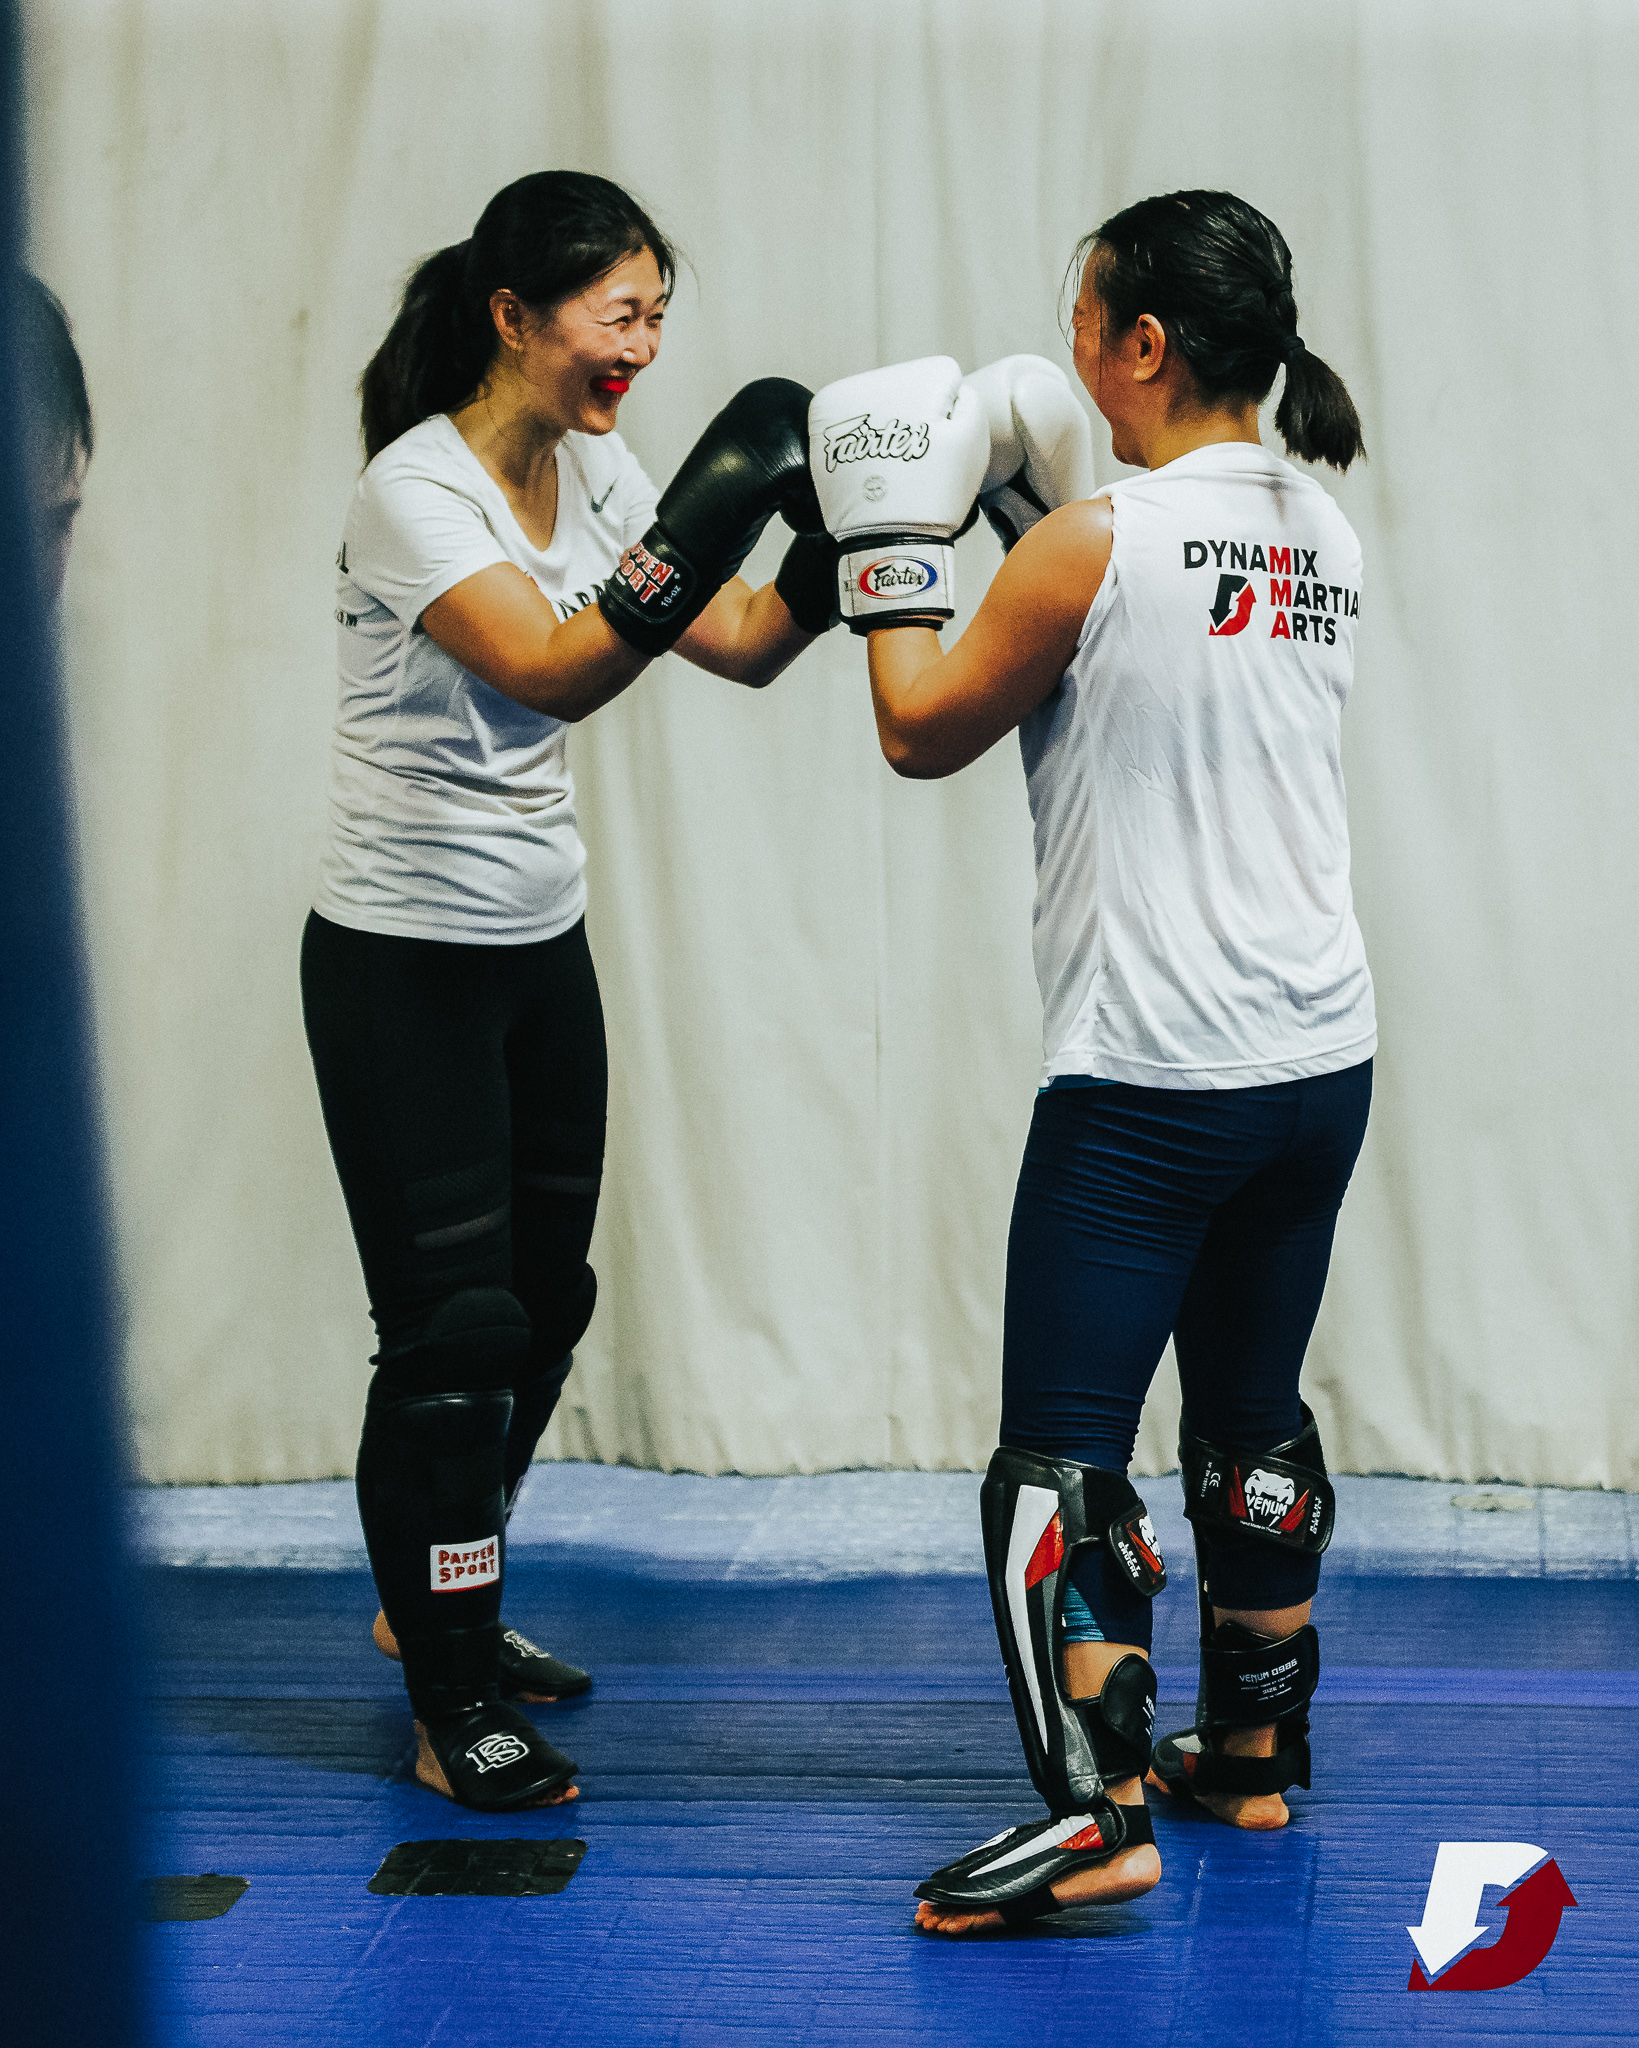 Kickboxing/ Muay Thai - MMA gym in Los Angeles